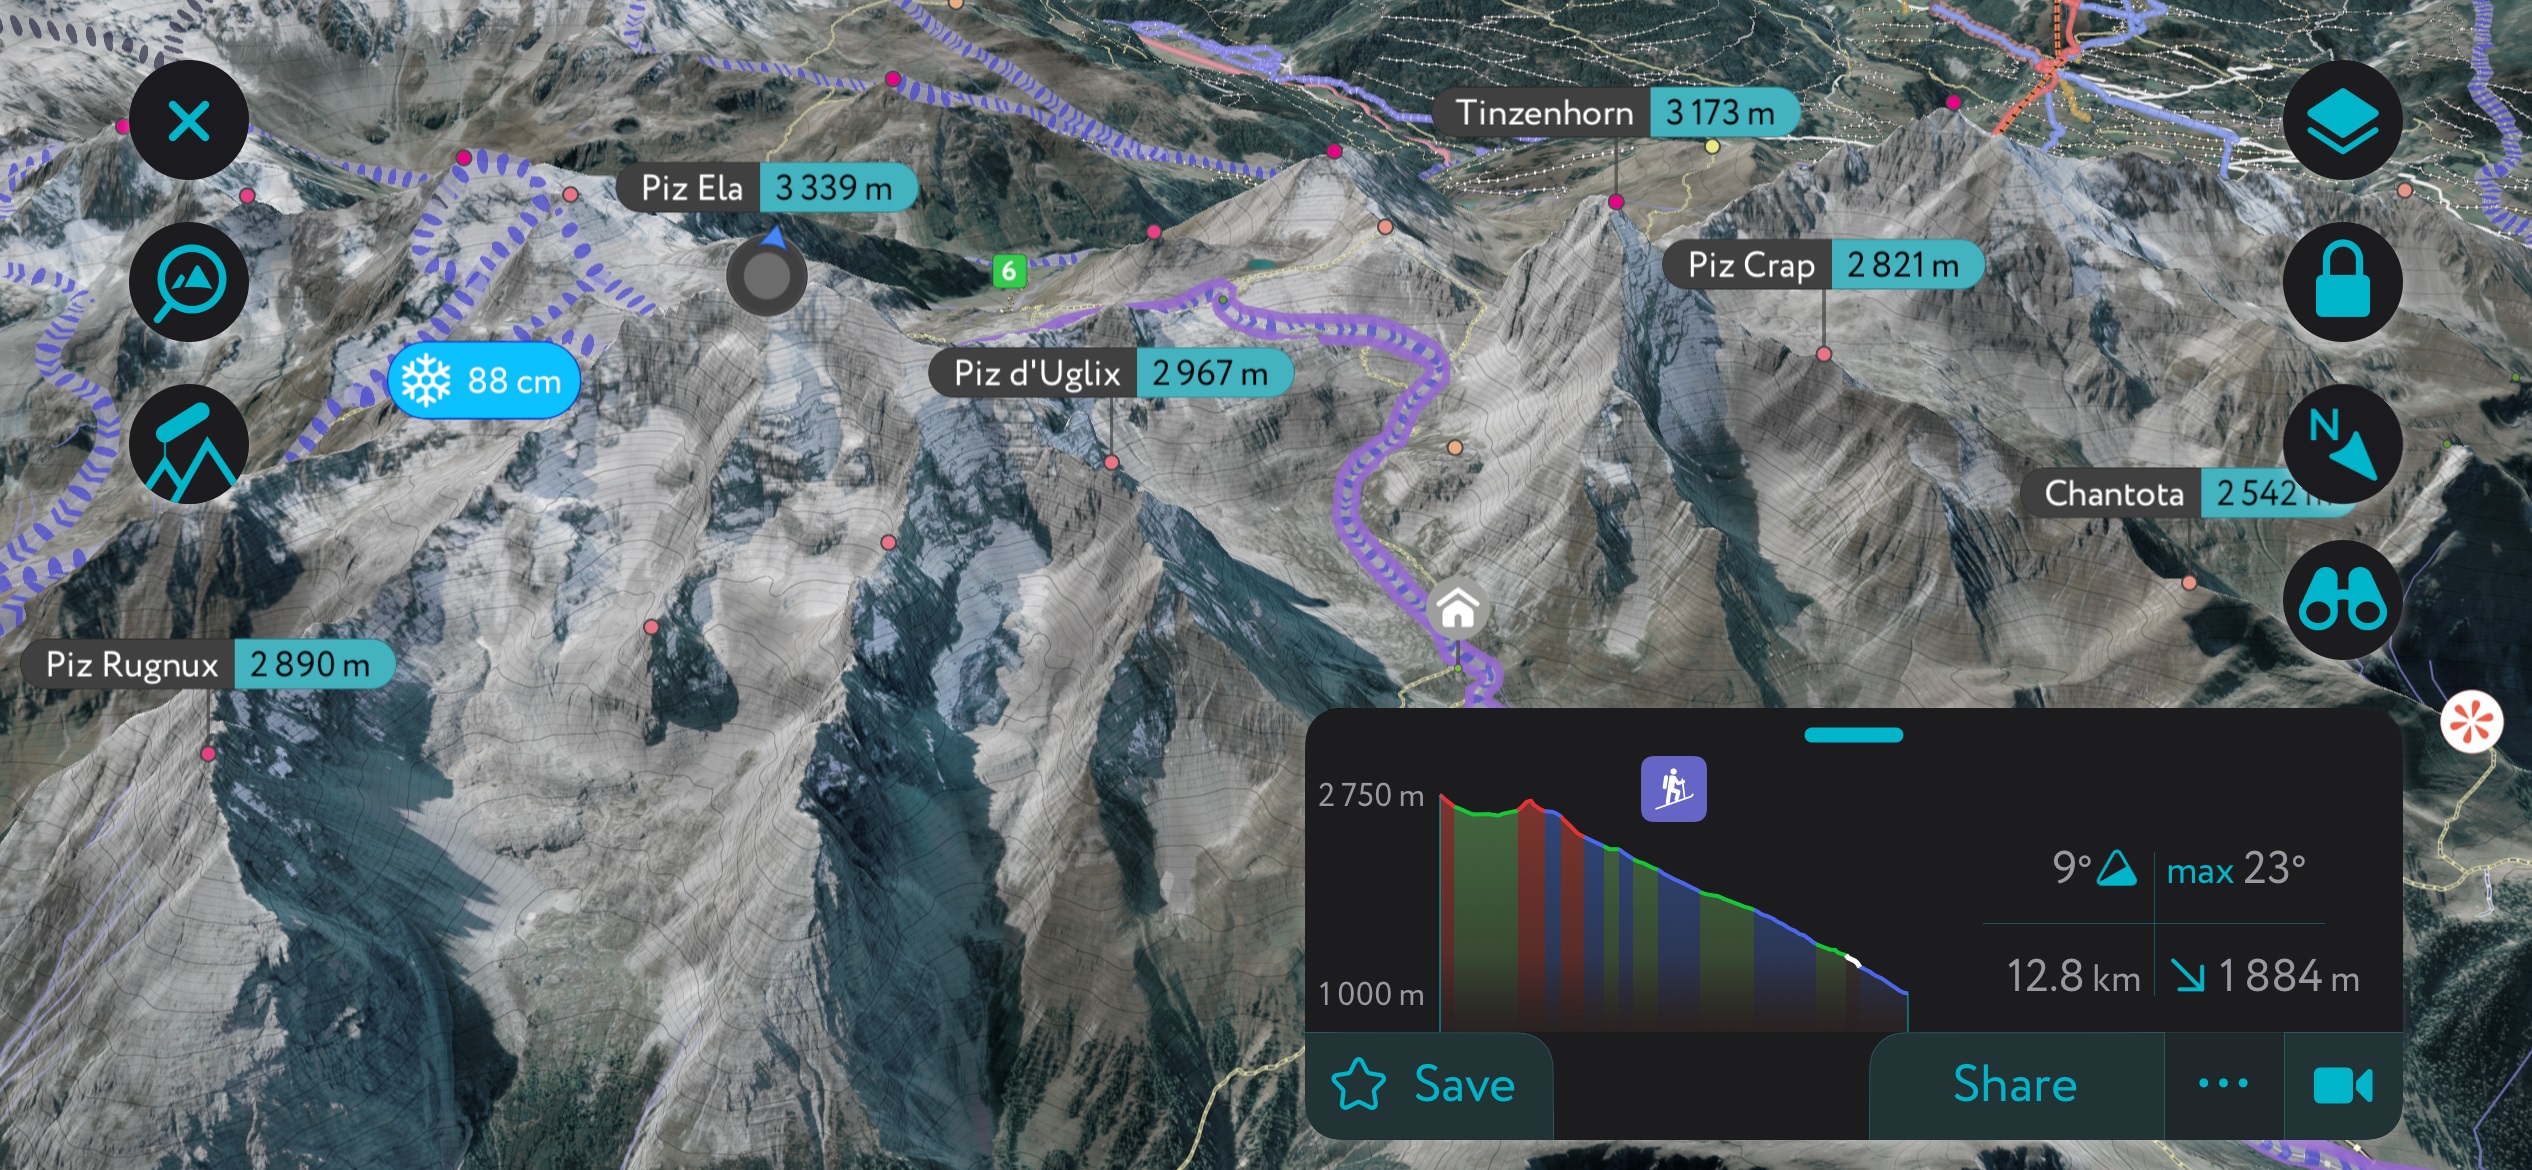 Albula Alps ski tours on PeakVisor’s mobile app in Winter Mode. Albula Alps